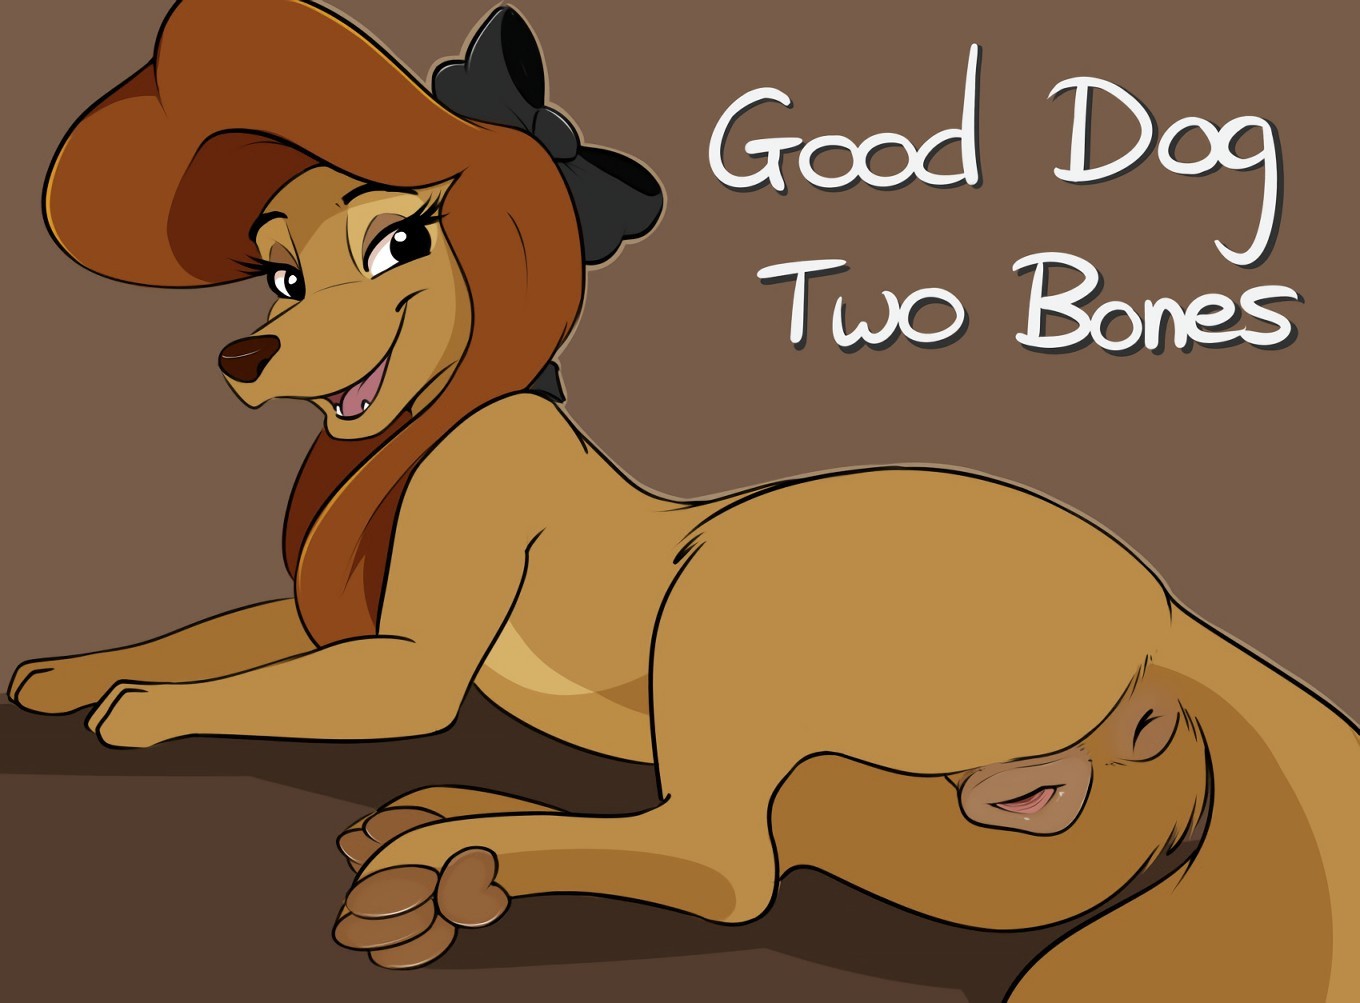 Good Dog Two Bones